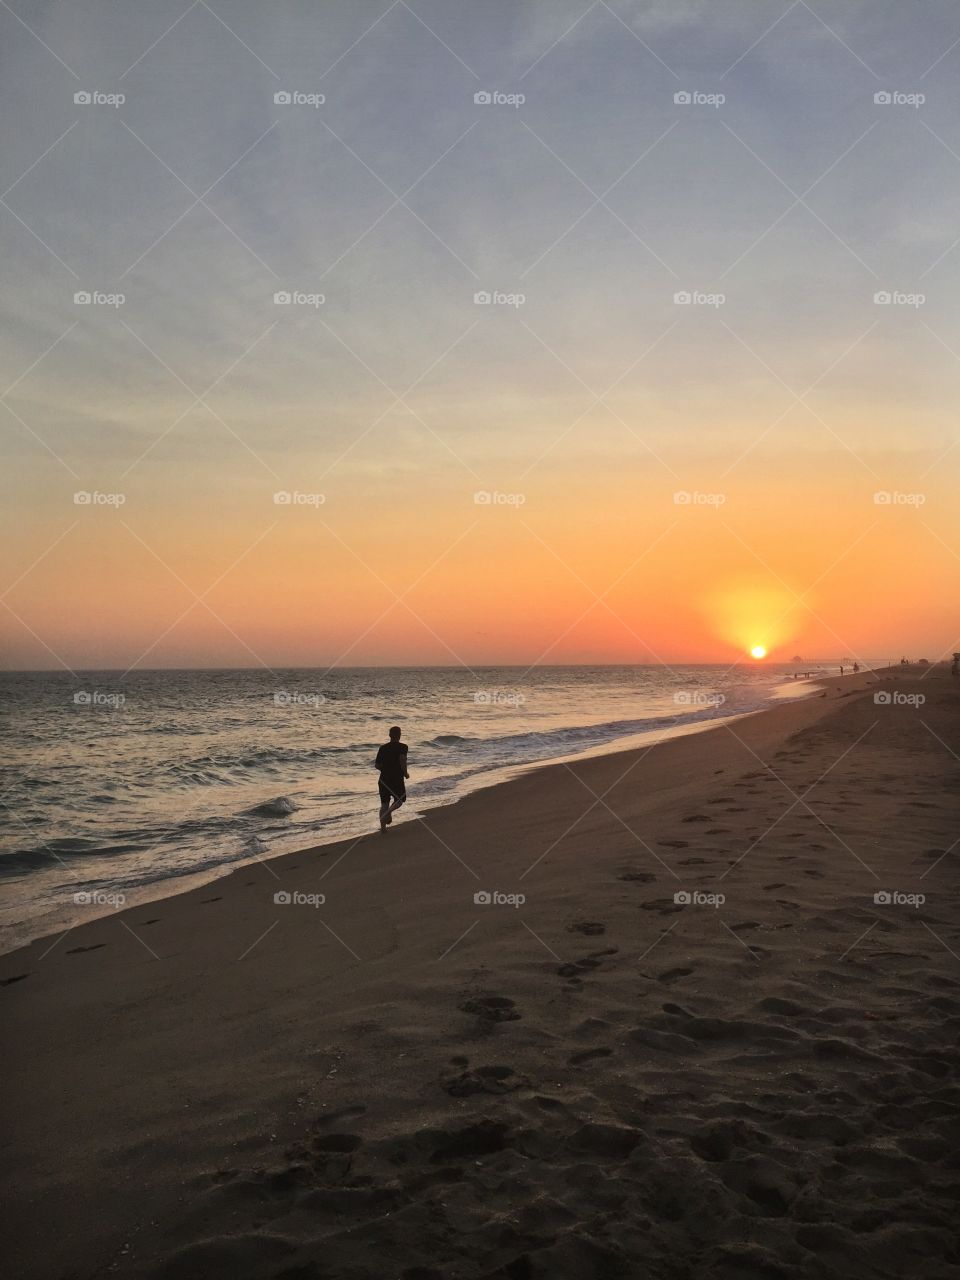 Running on the beach at sunset 